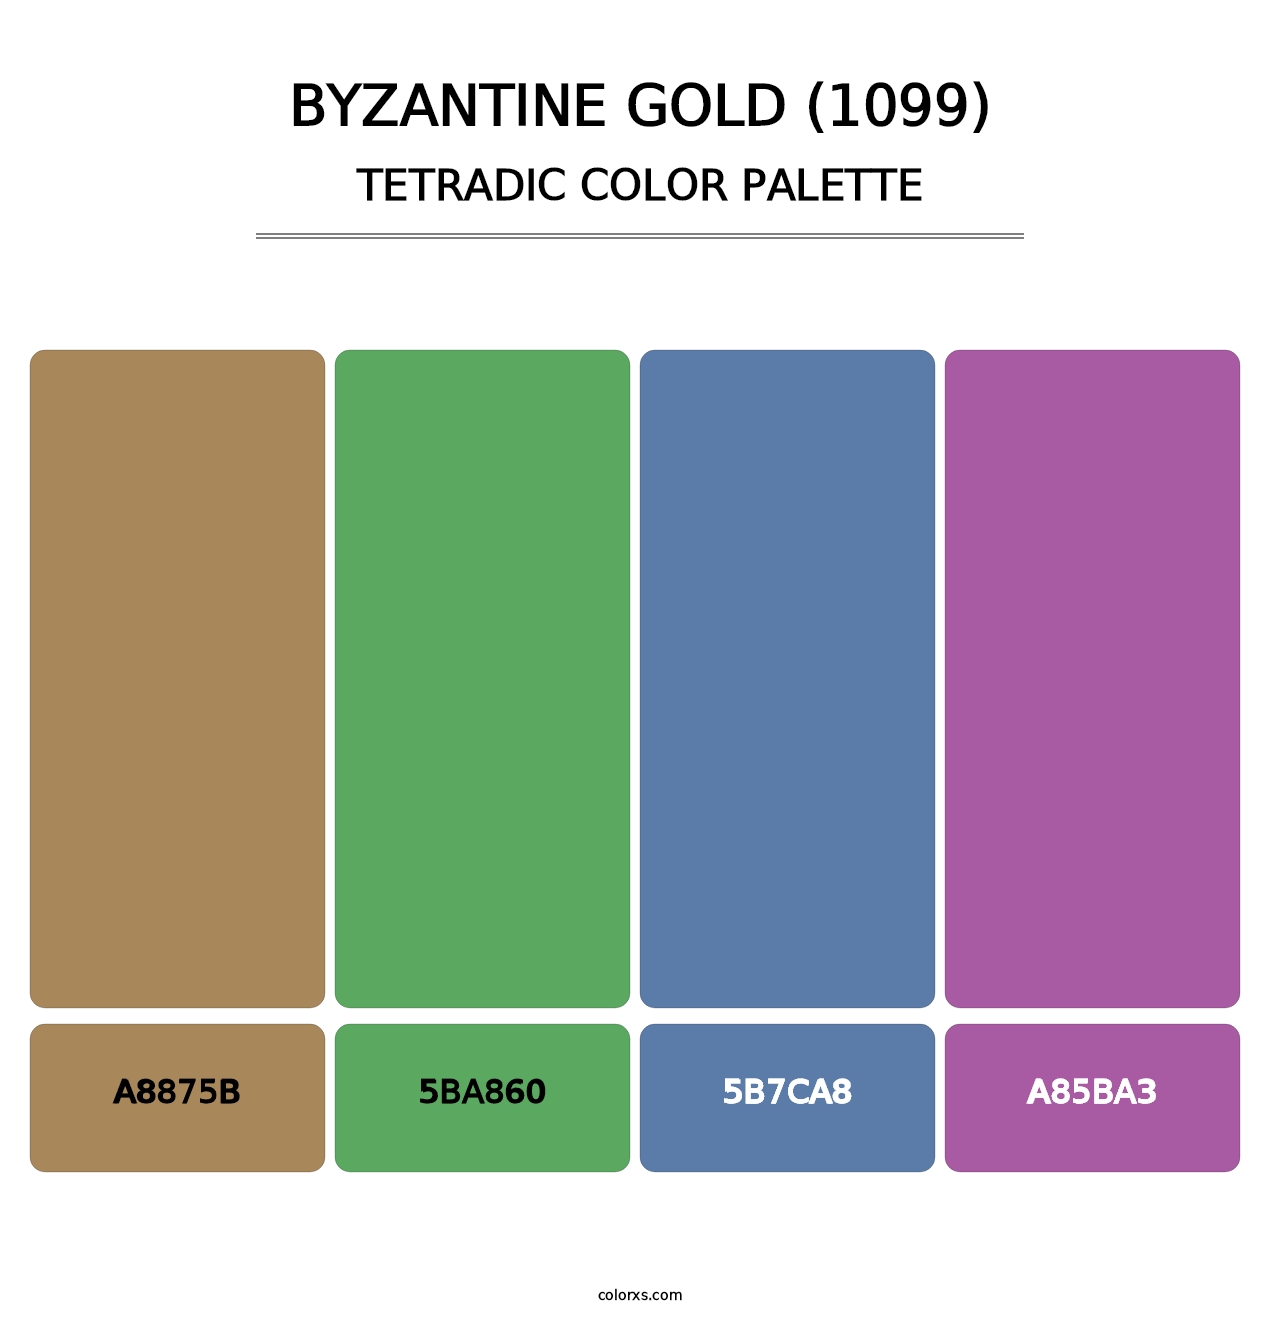 Byzantine Gold (1099) - Tetradic Color Palette